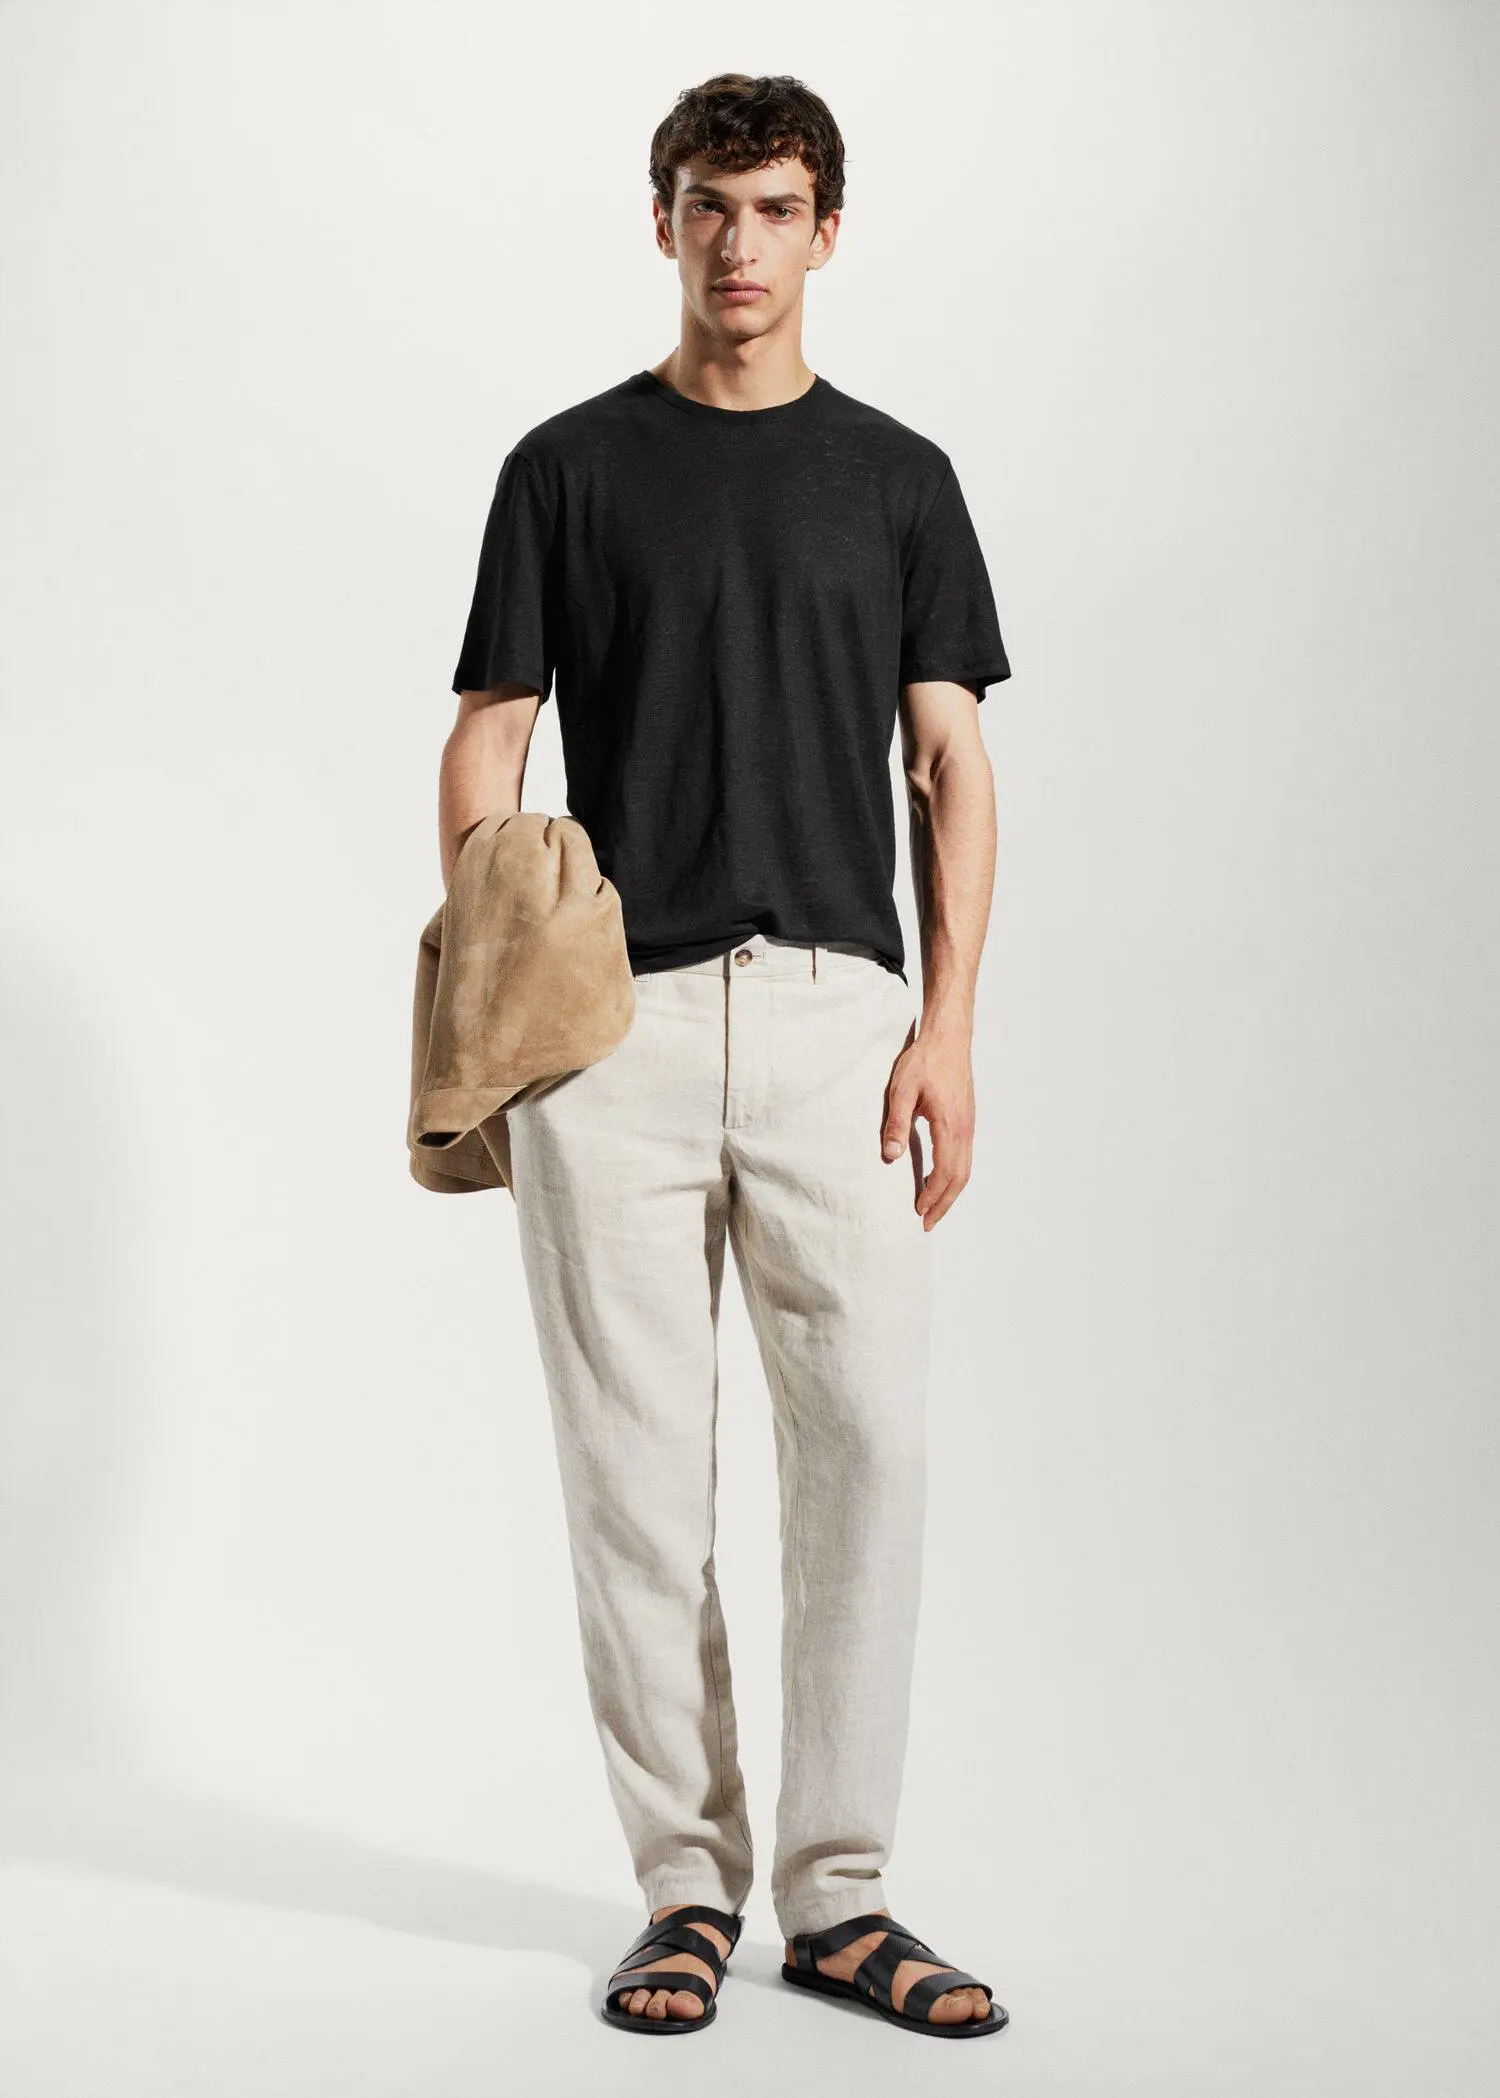 Mango 100% linen slim-fit t-shirt. a man in a black t-shirt holding a bag. 